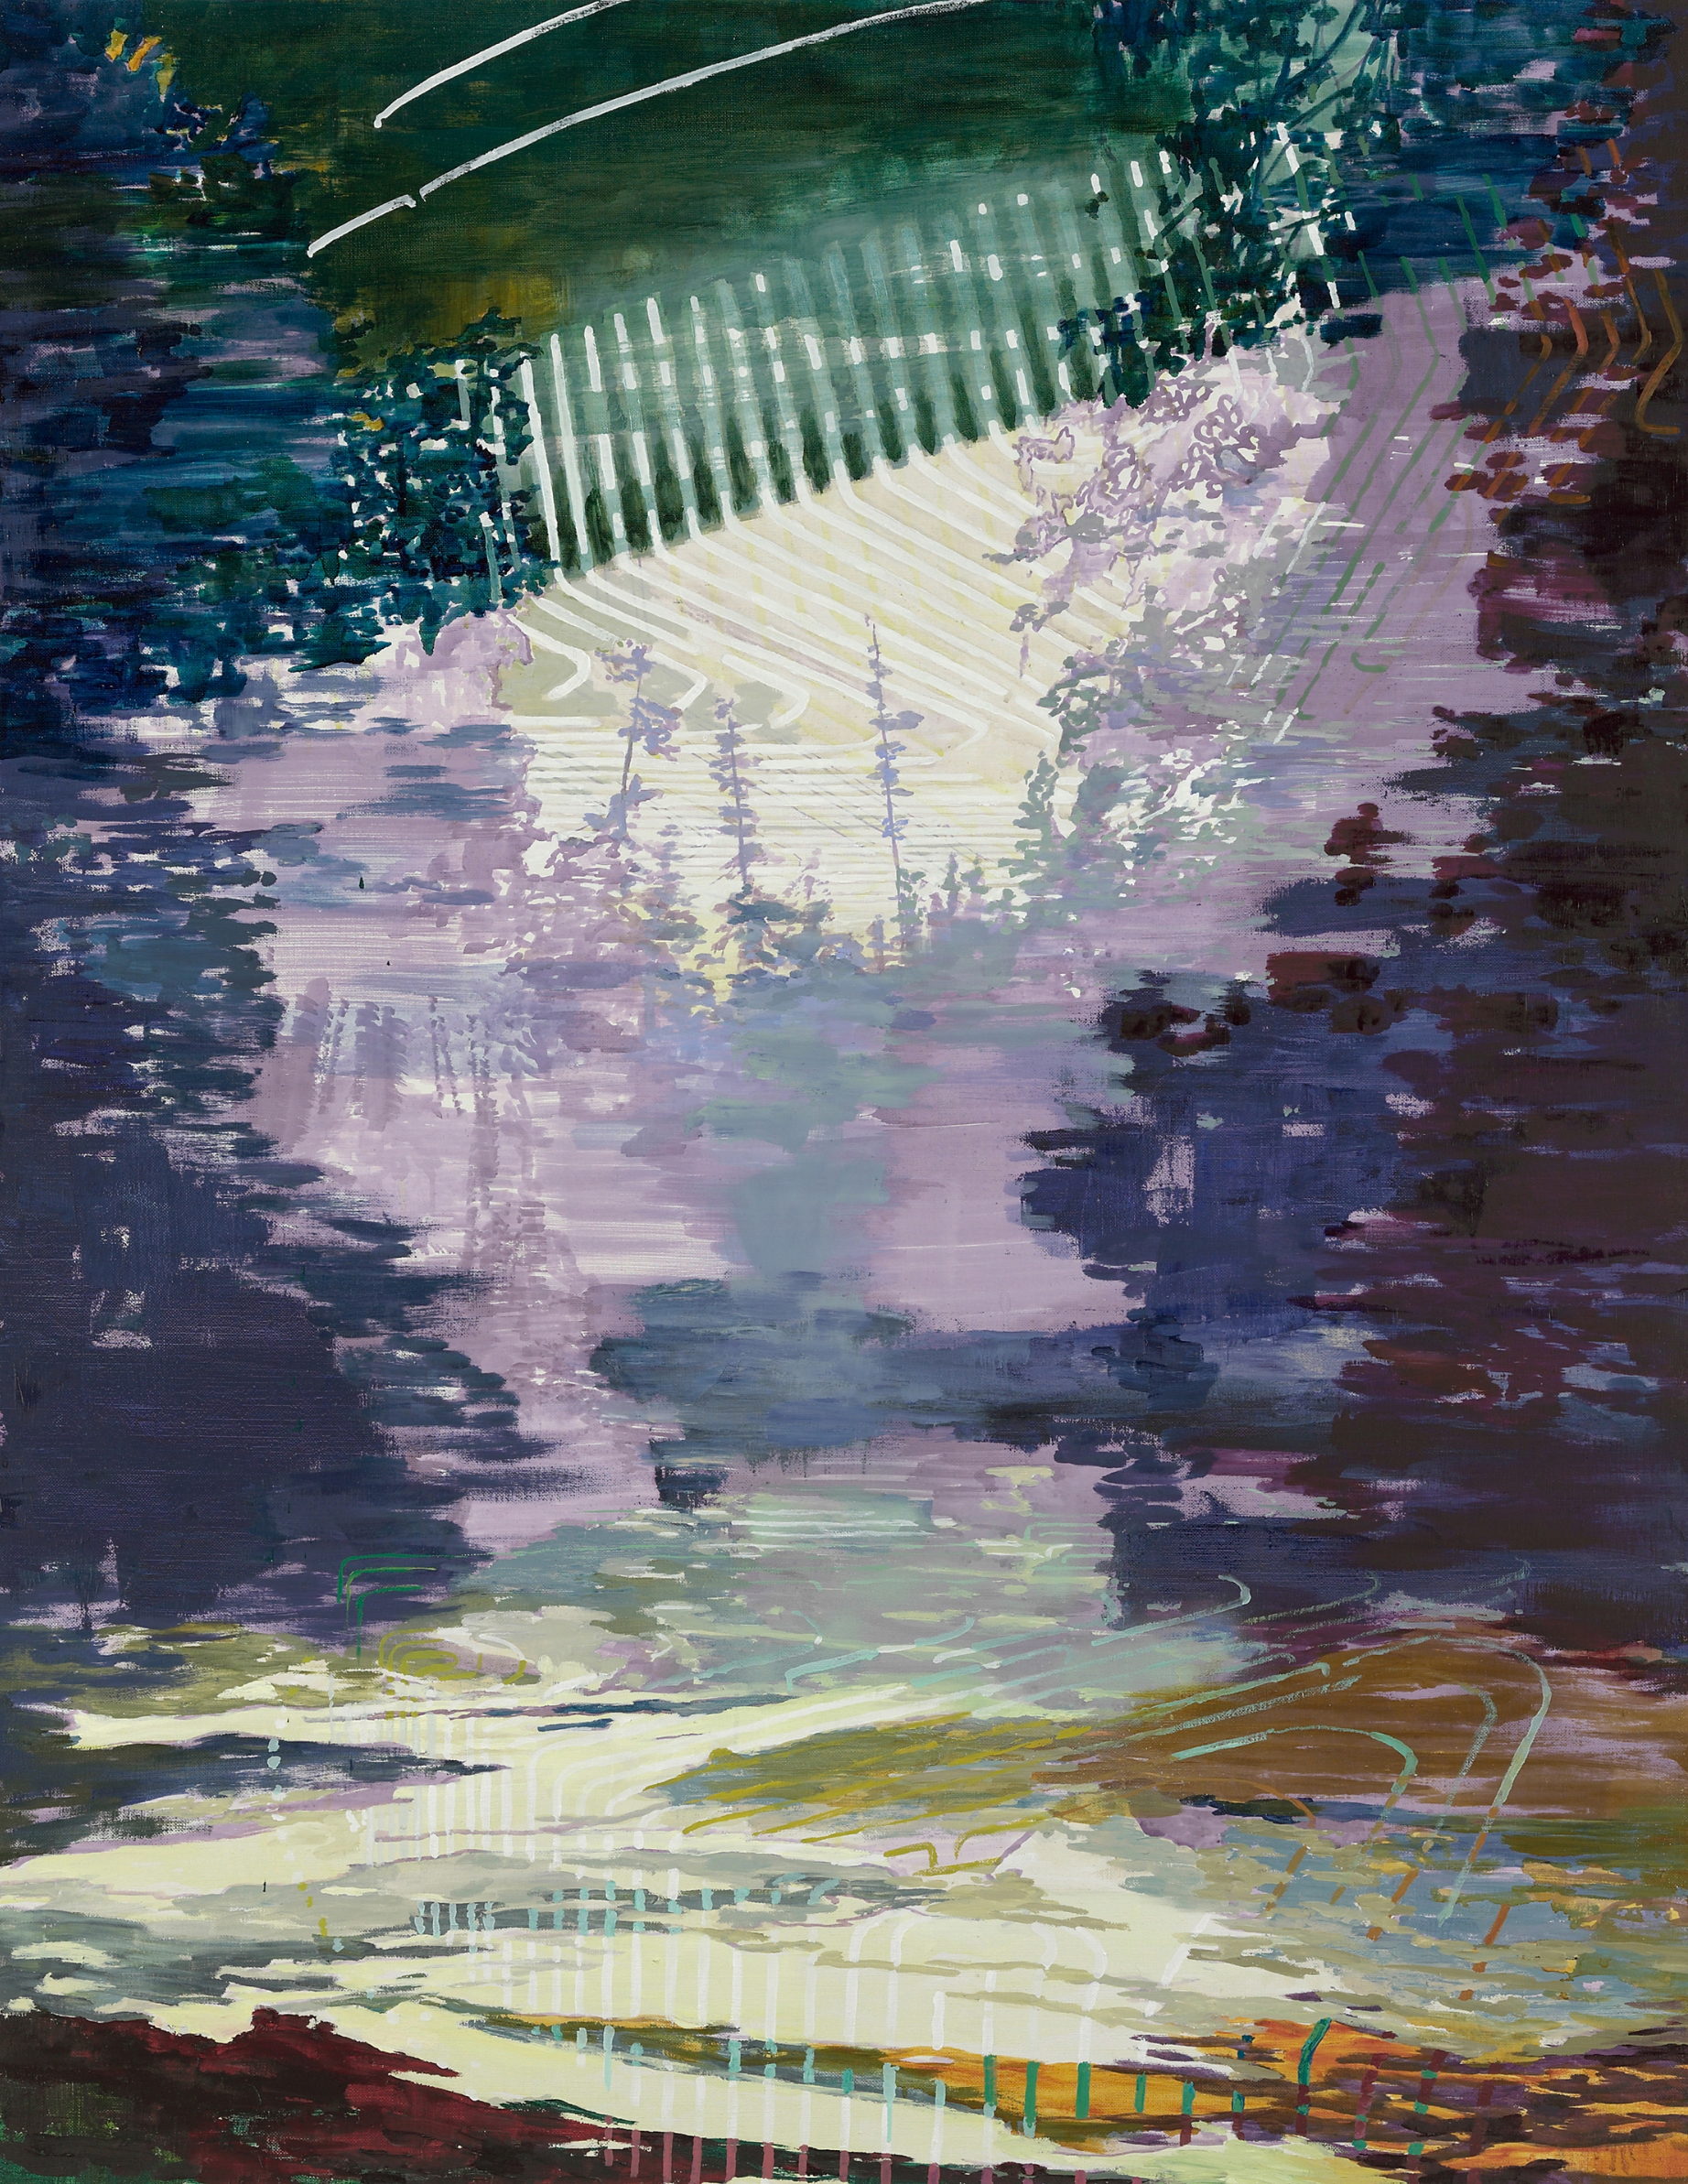 Neon Night Sky, 2009, 180 x 140 cm, oil on canvas